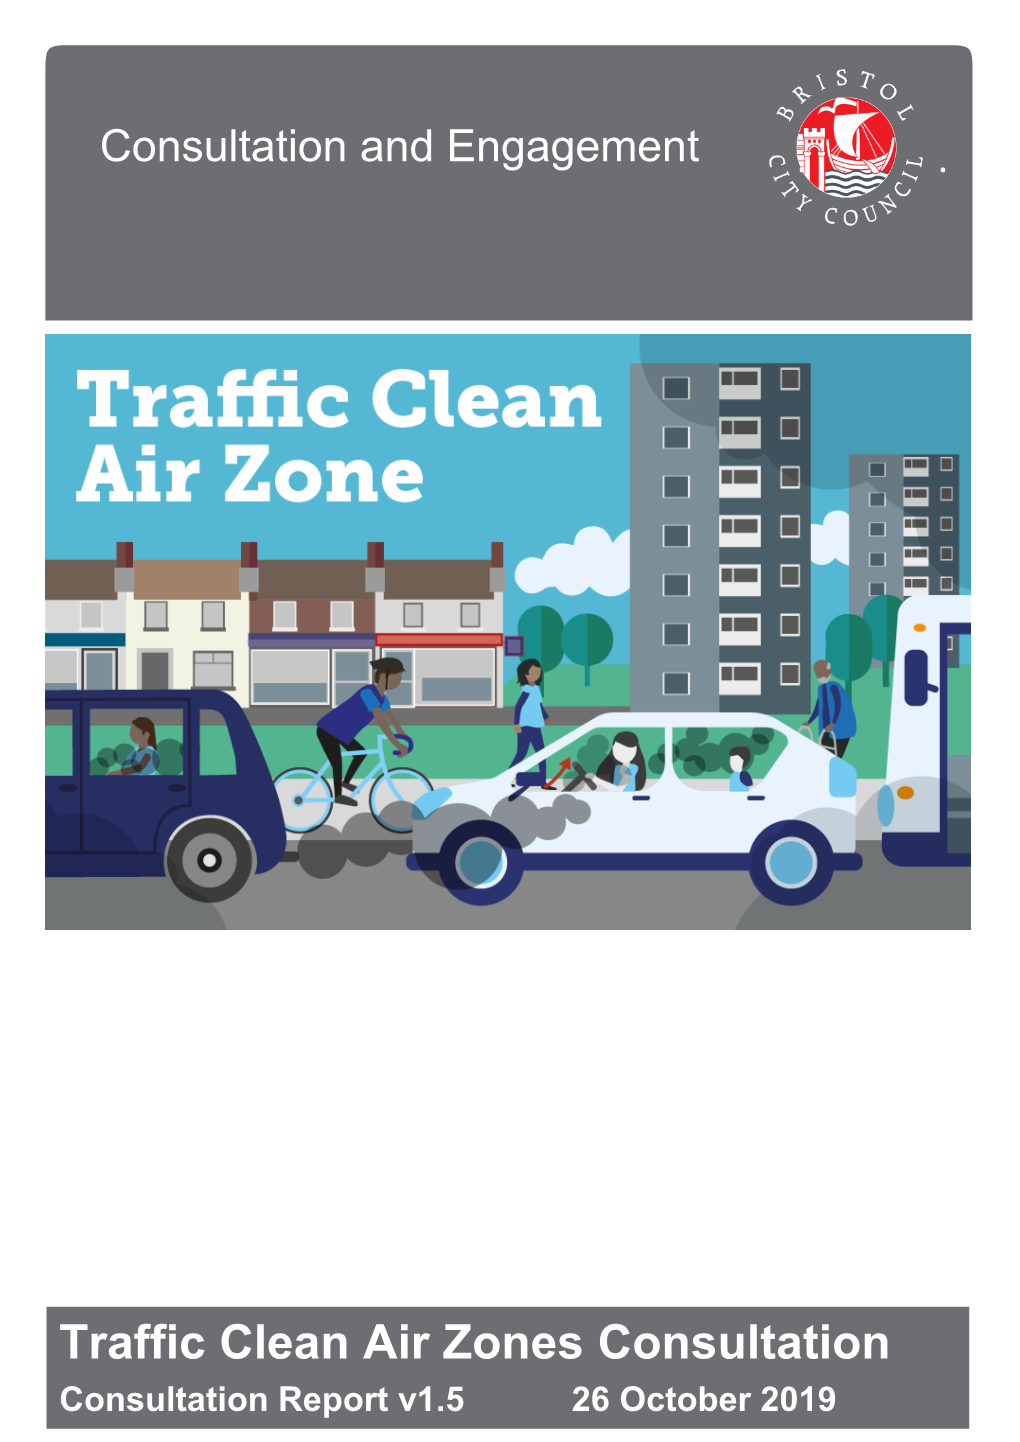 Traffic Clean Air Zones Consultation Consultation Report V1.5 26 October 2019